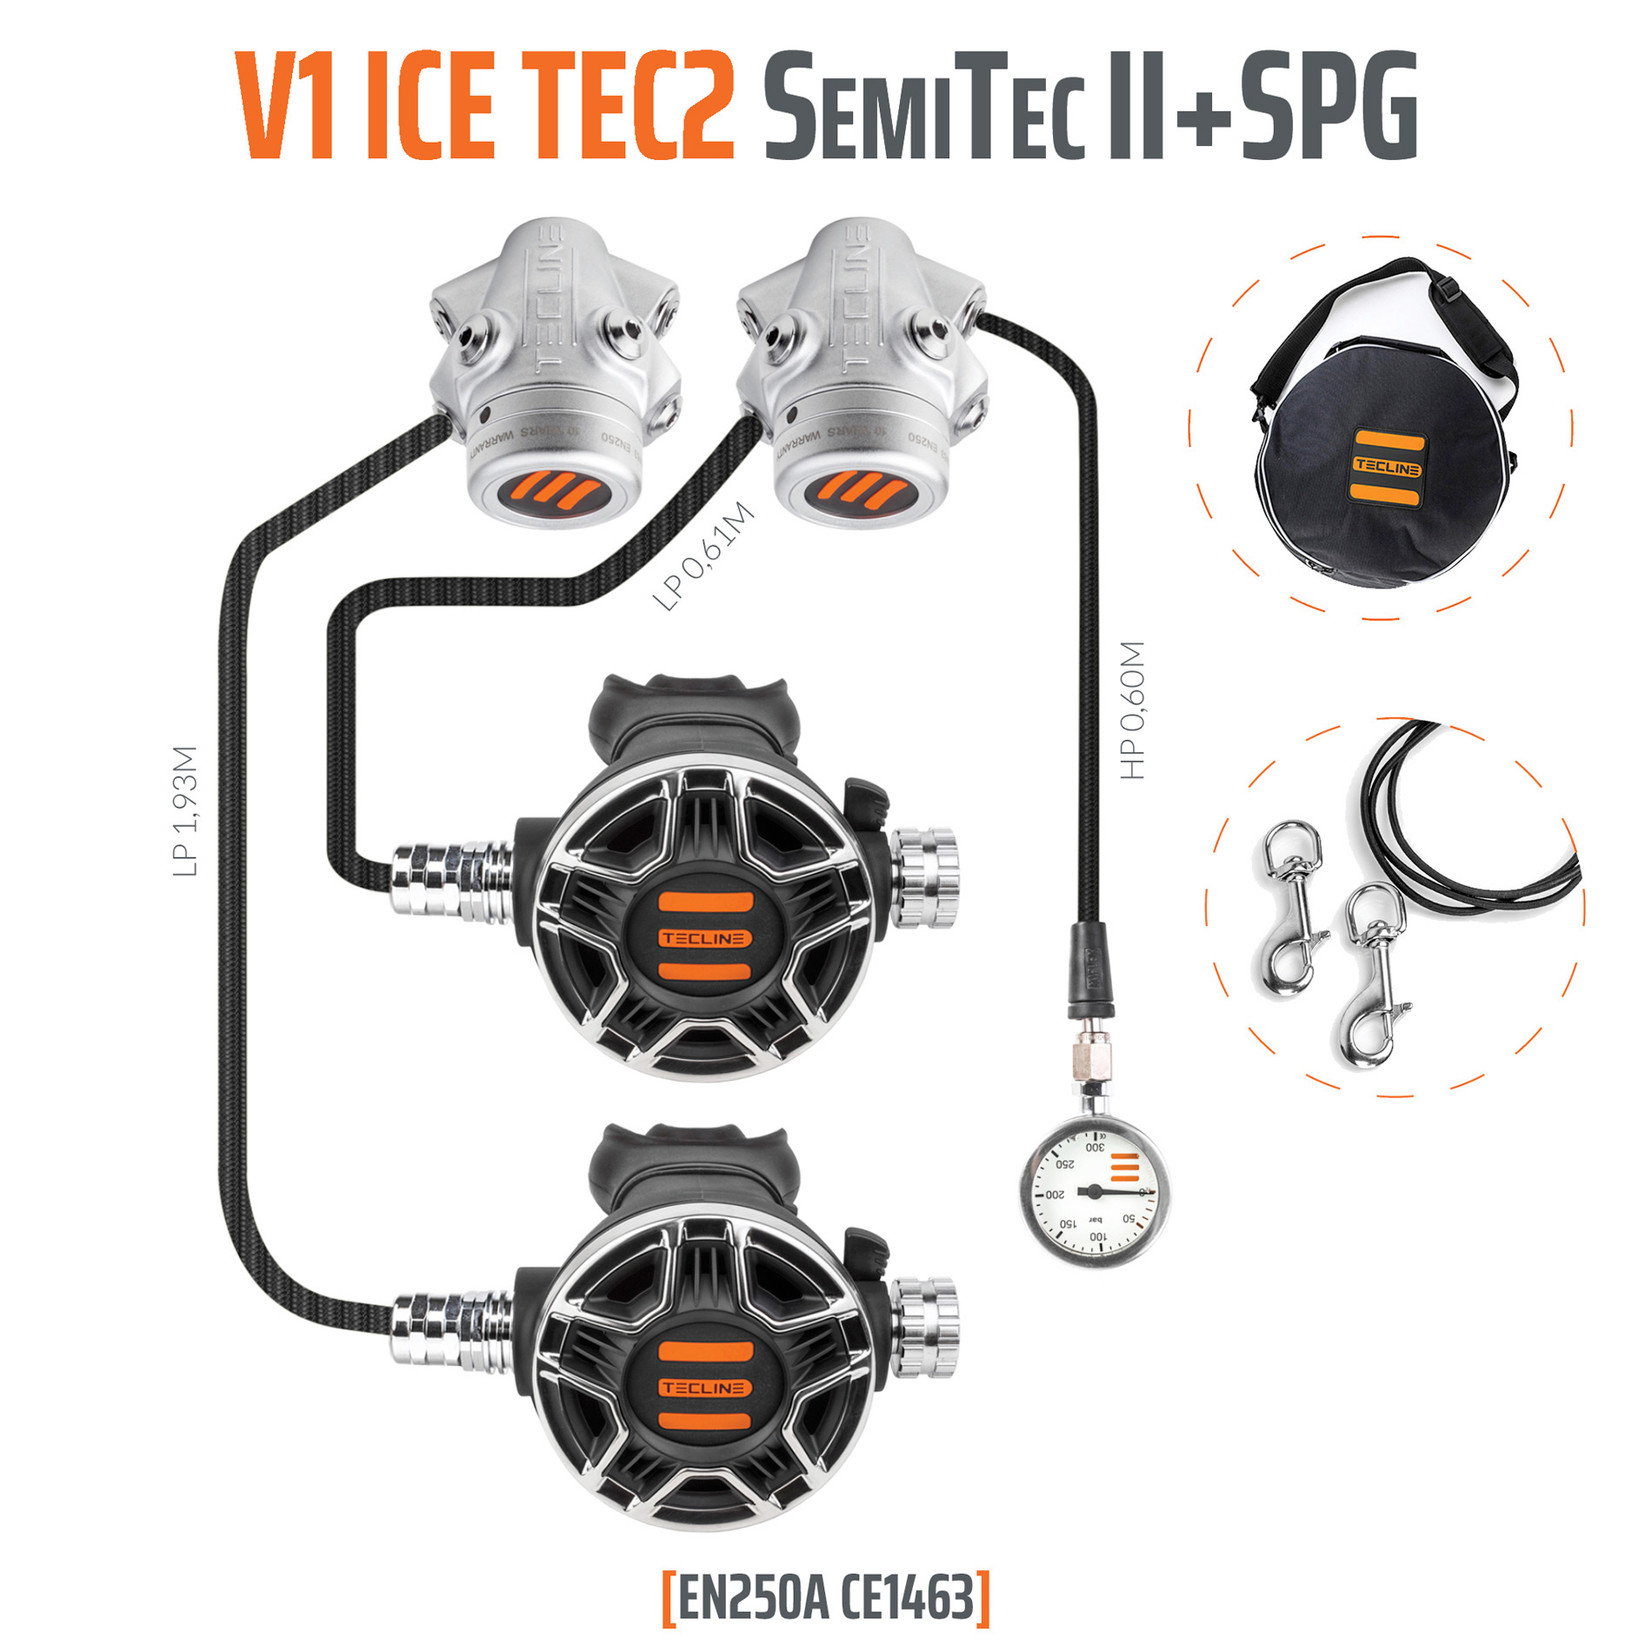 Tecline Regulator V1 ICE TEC2 SemiTec II set with SPG- EN250A